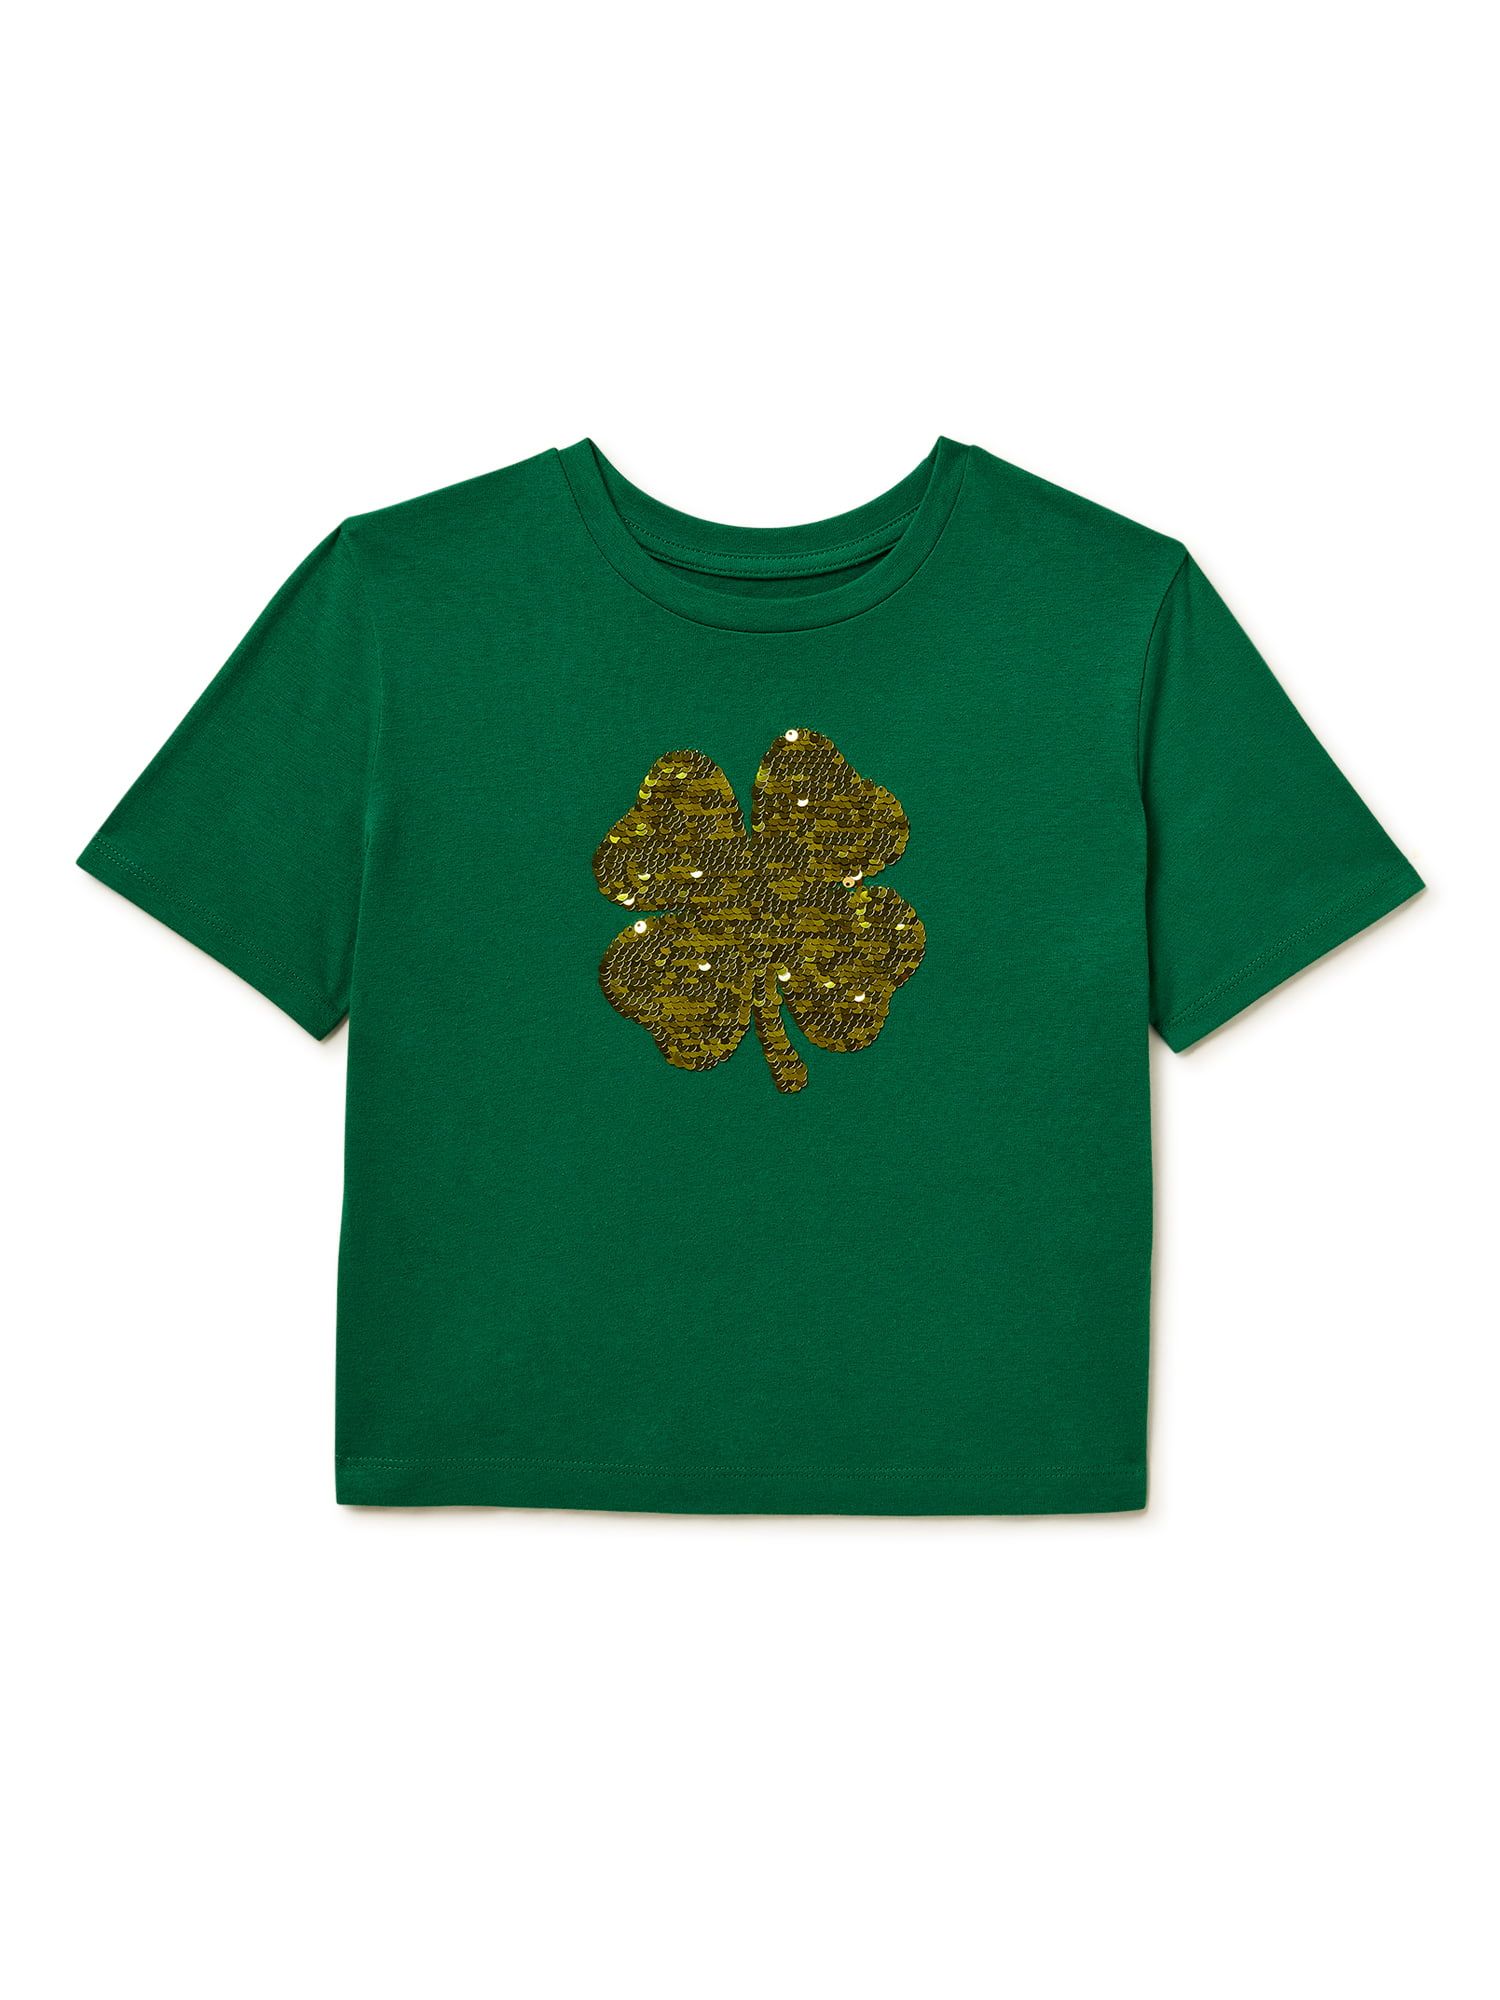 WAY TO CELEBRATE!St. Patricks' Day Girls Short Sleeve Clover Tee, Sizes 4-18USD$6.98(1.0)1 star o... | Walmart (US)